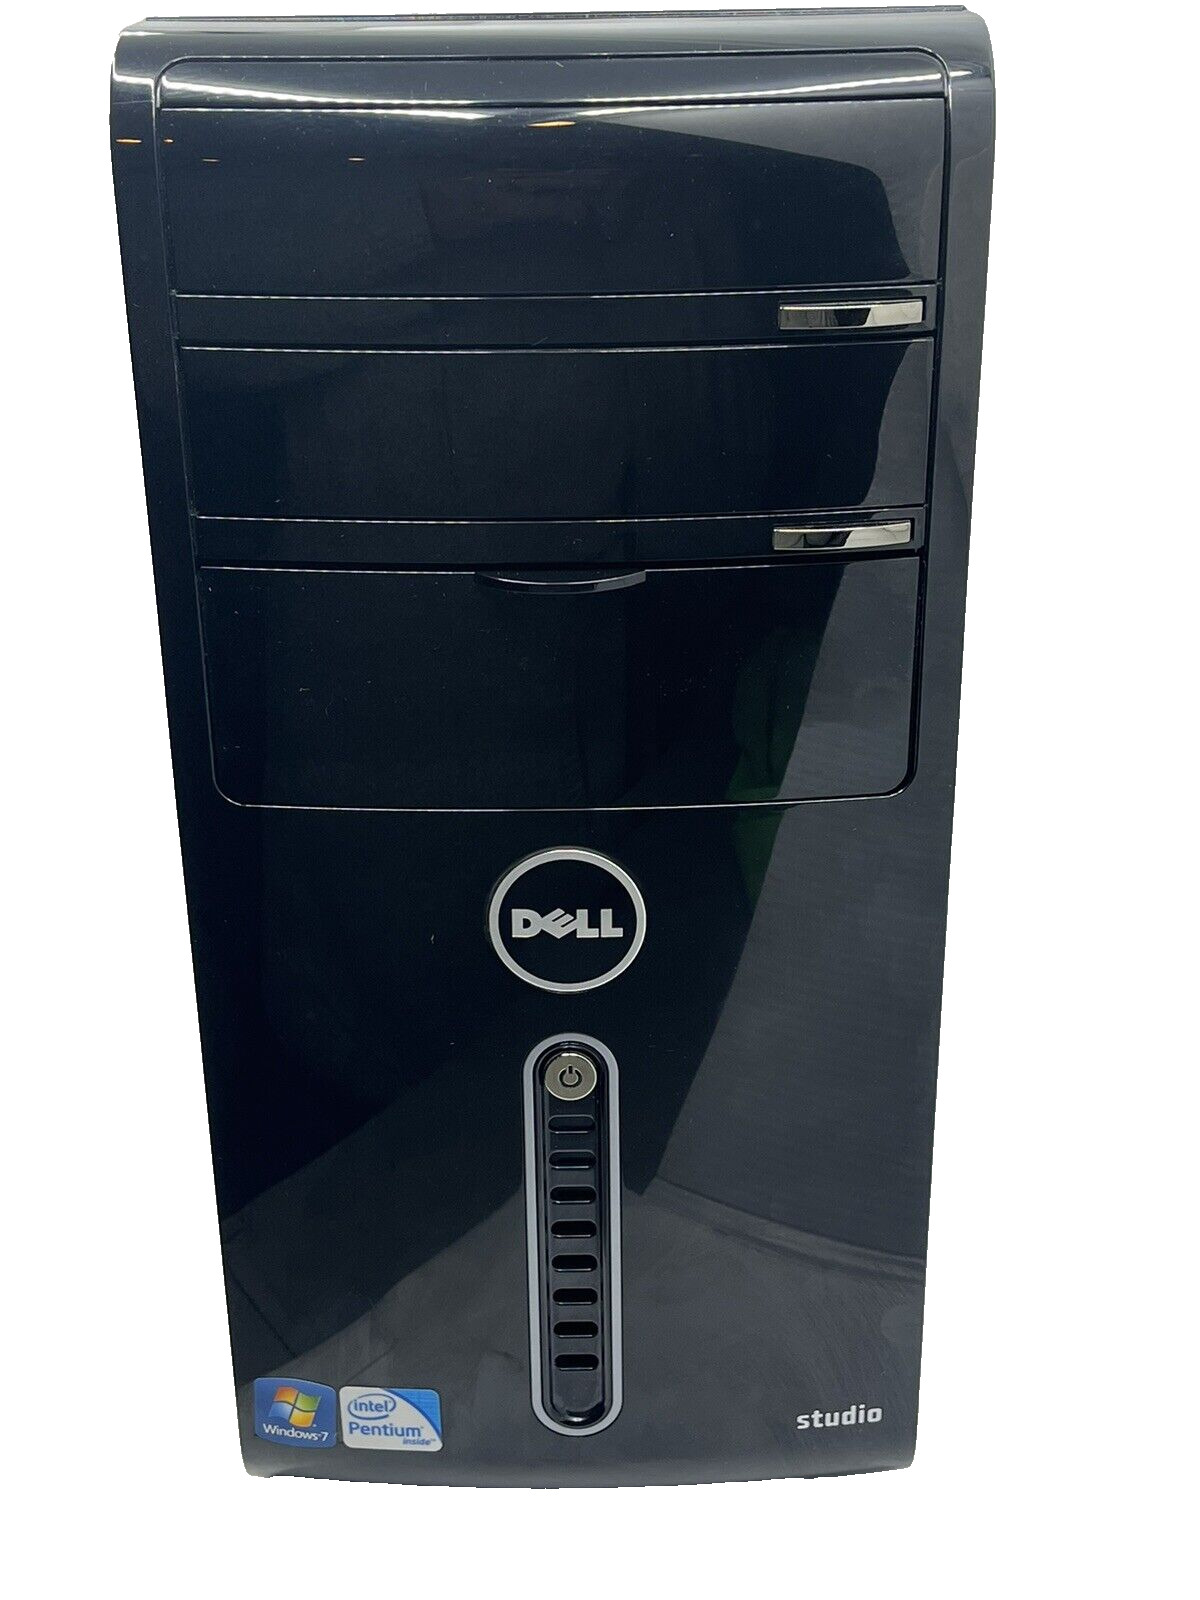 Dell Studio 540 Tower PC Desktop Pentium E5400 4GB Ram 500GB HDD ATI4500 GPU